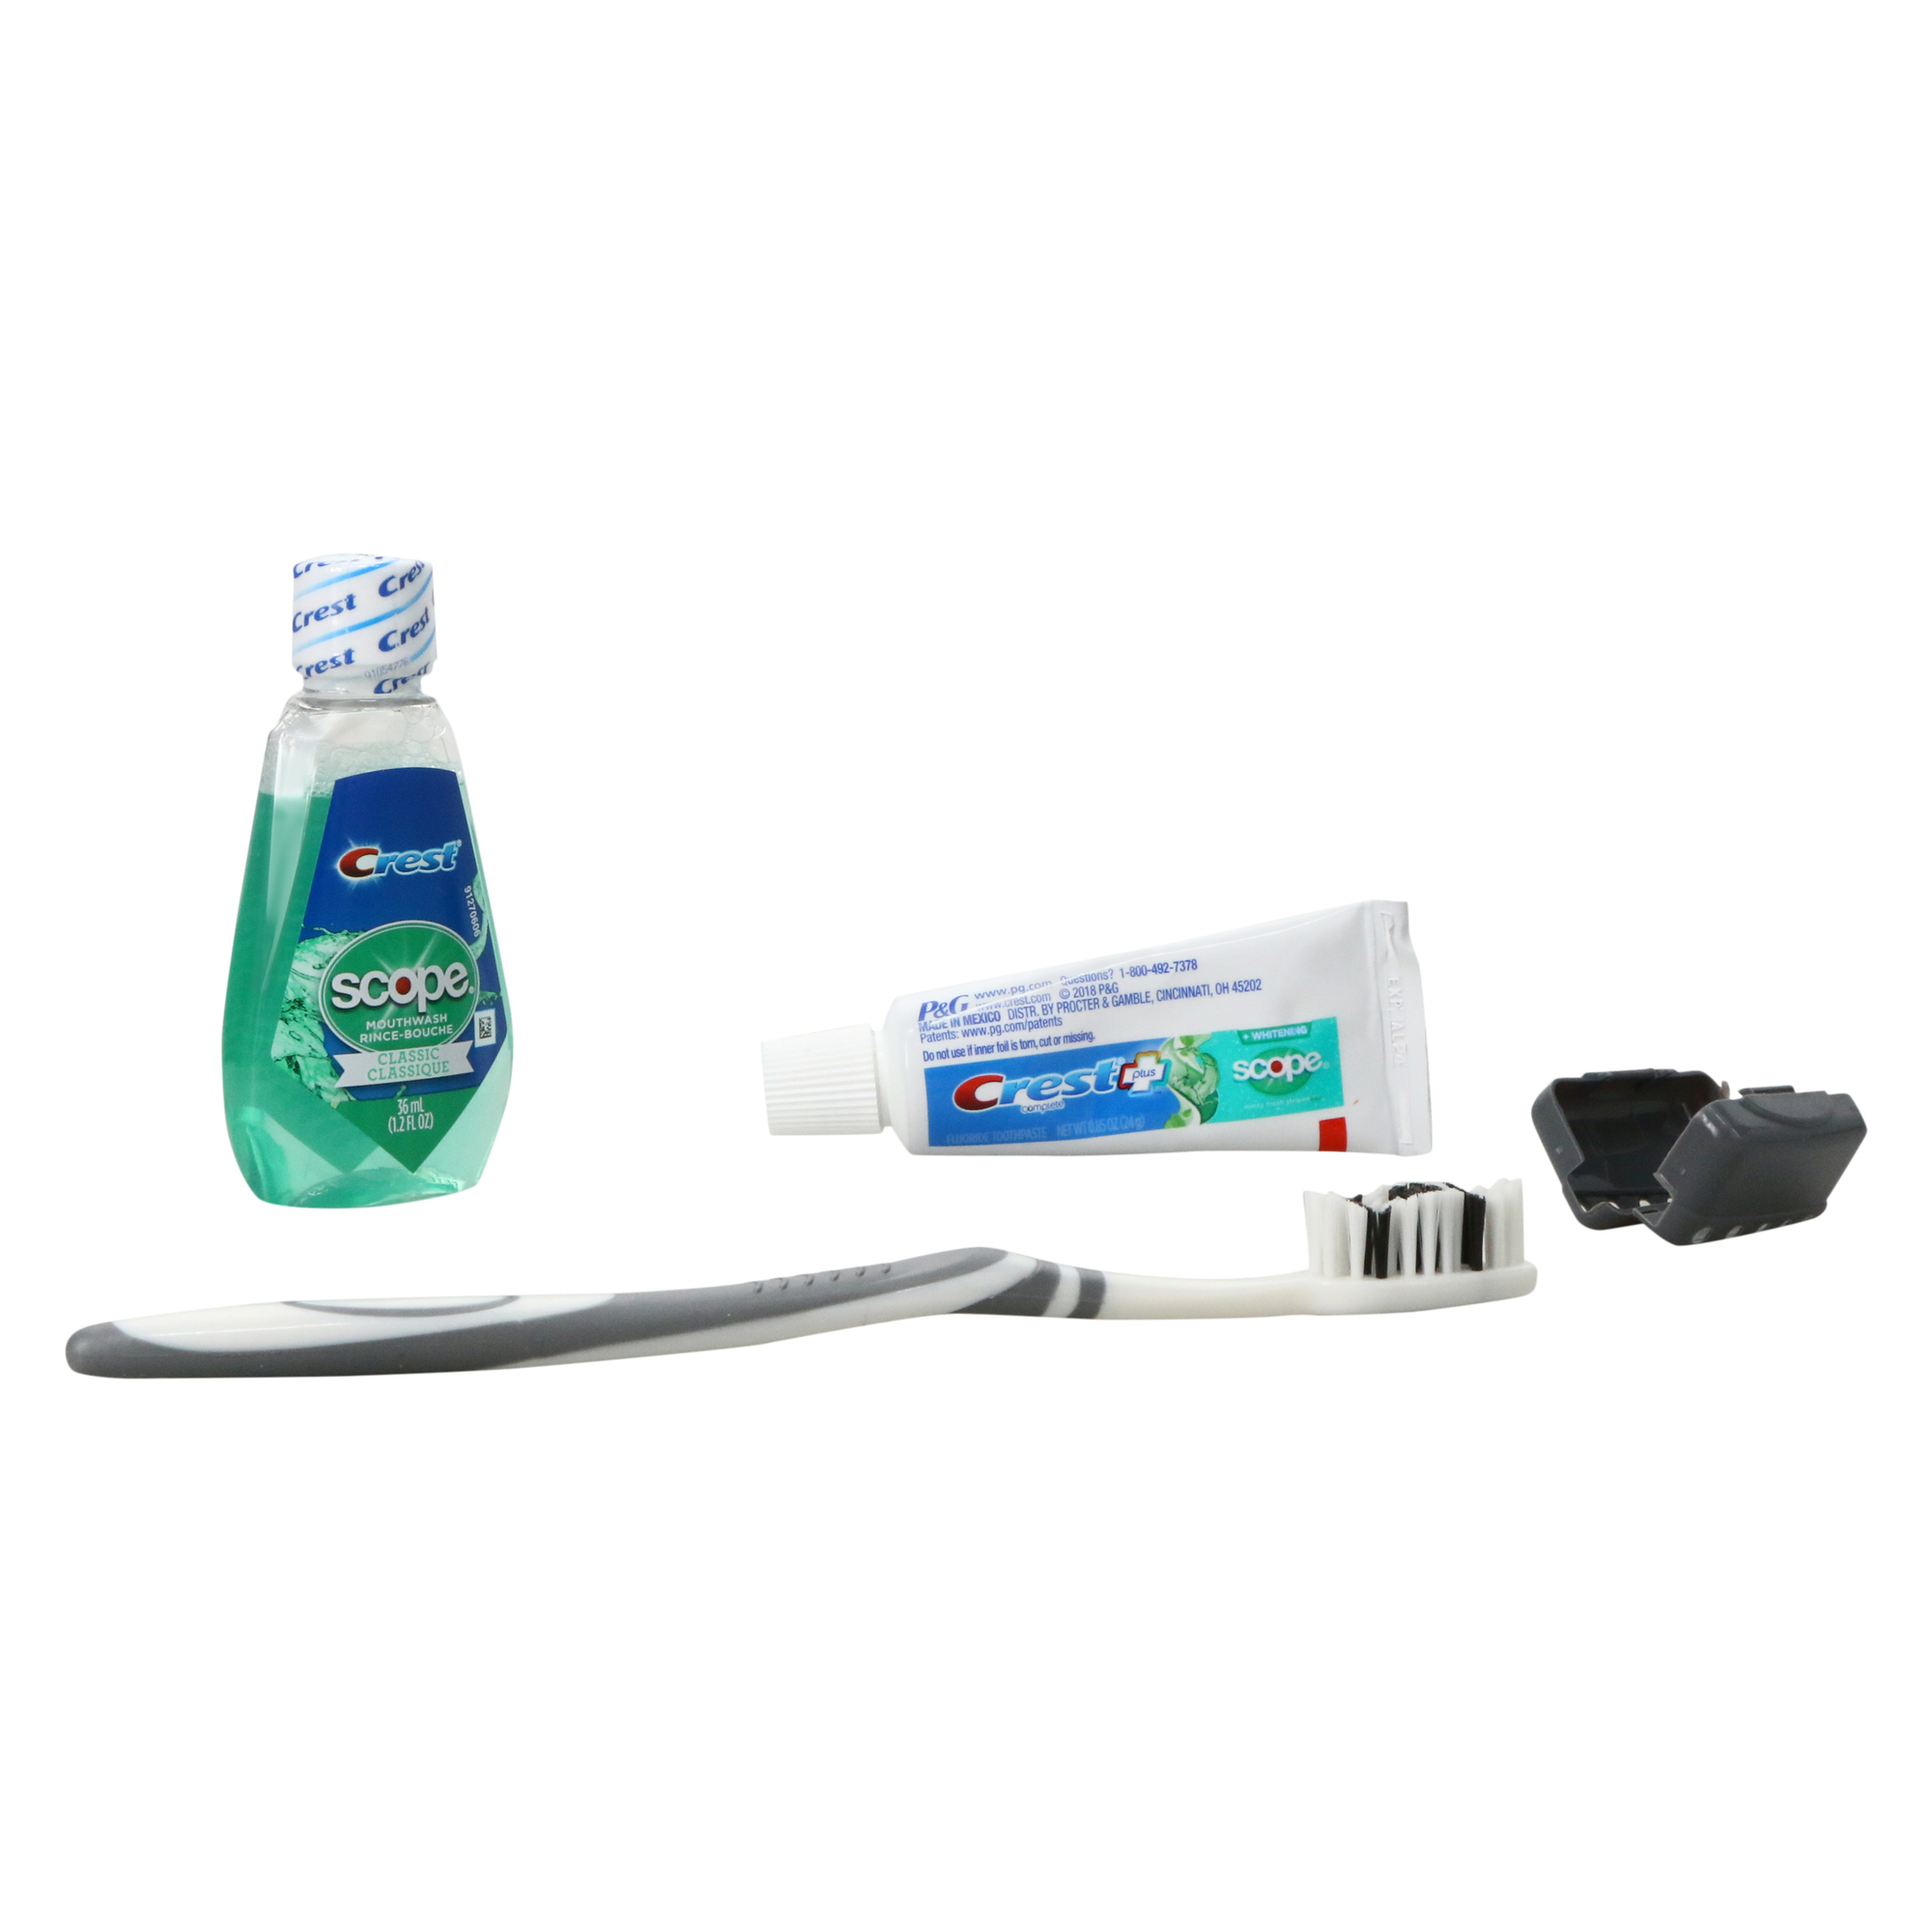 crest® travel toothbrush kit